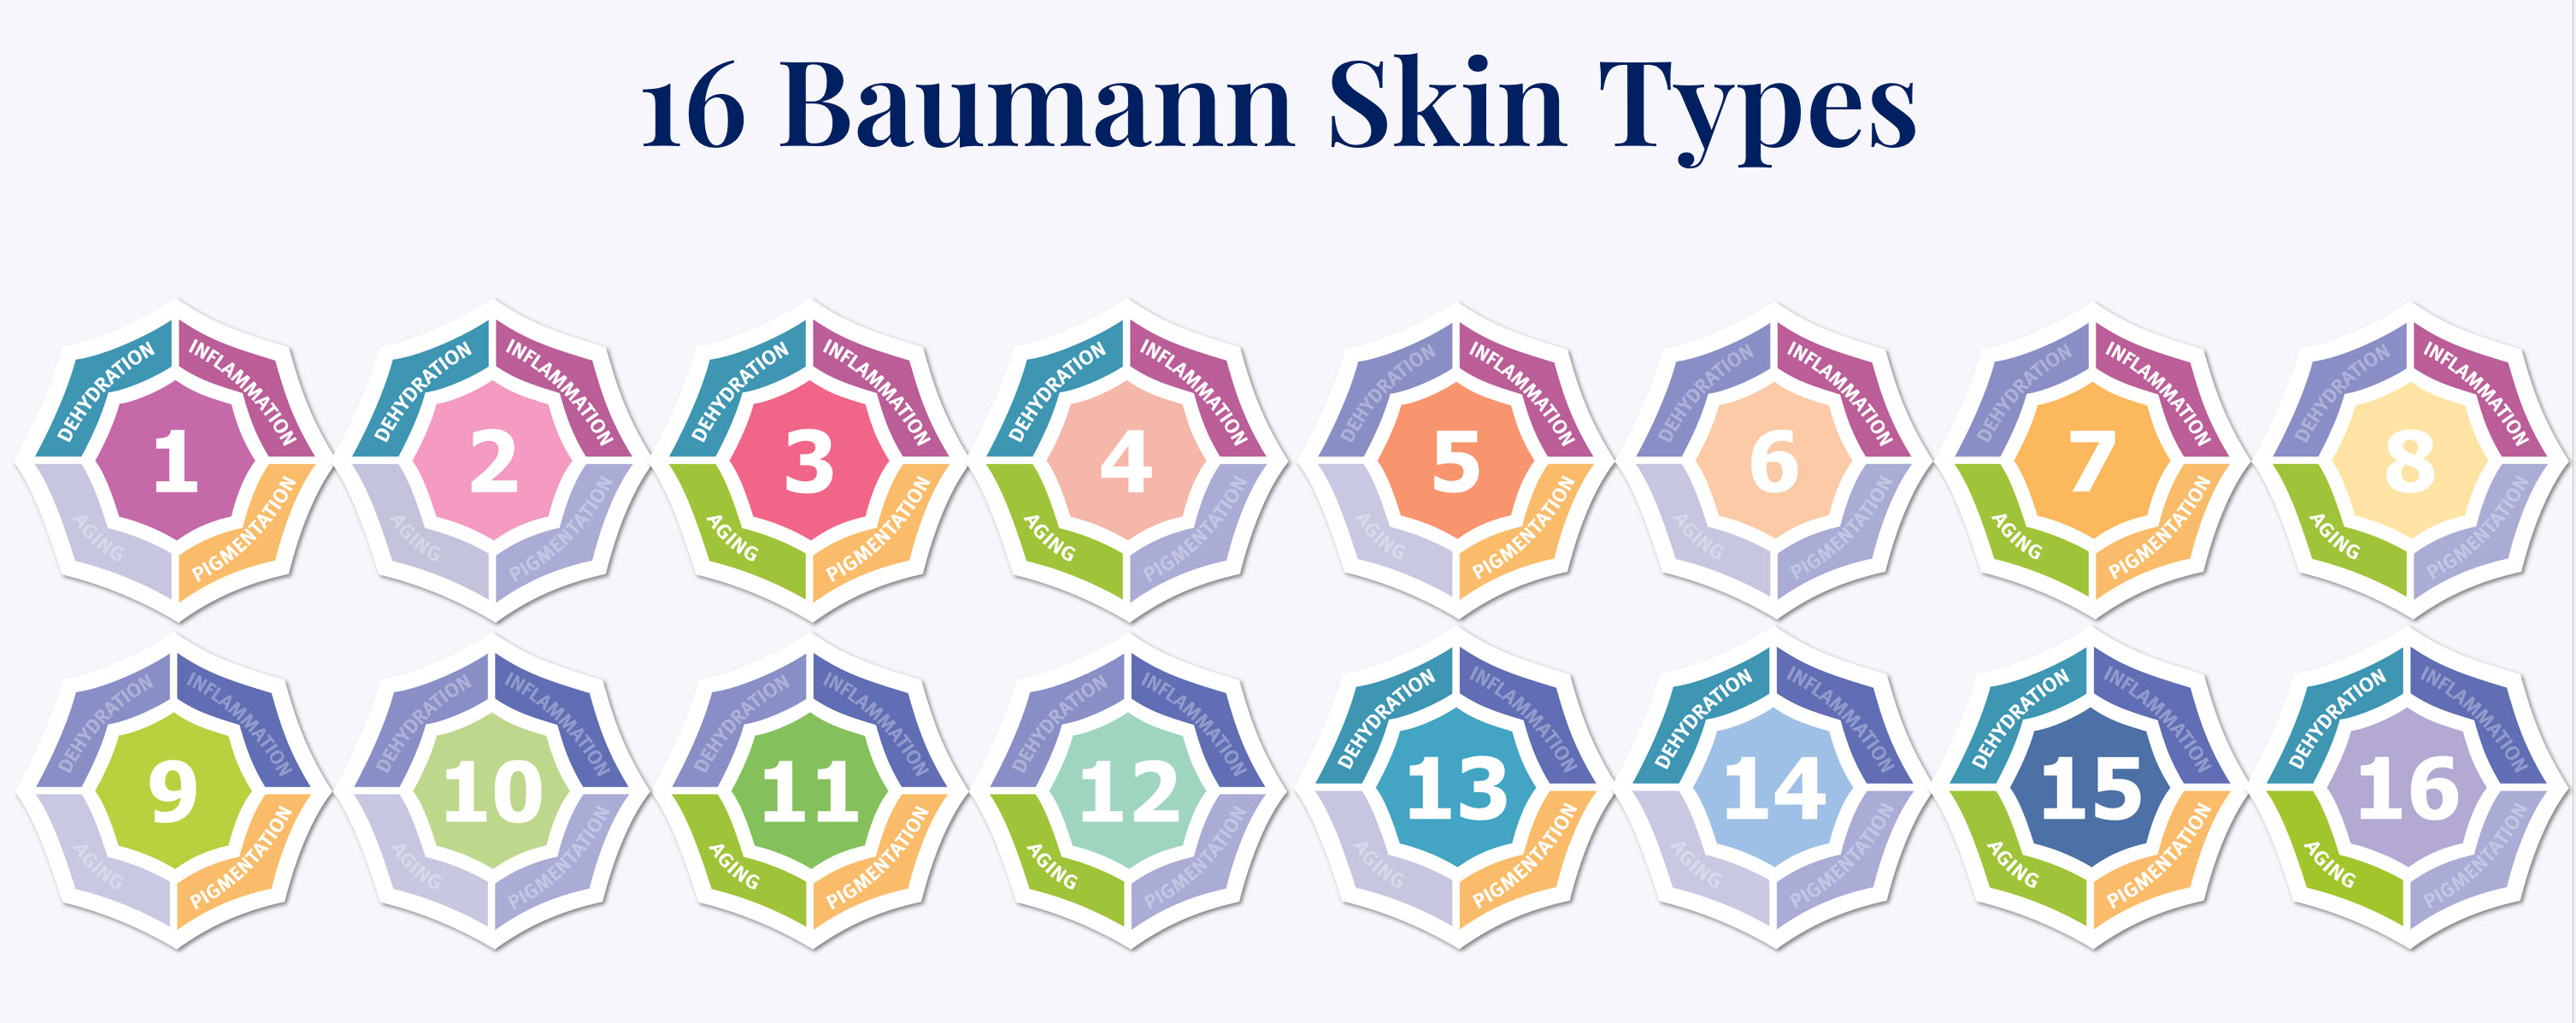 16 Baumann Skin Types.jpg